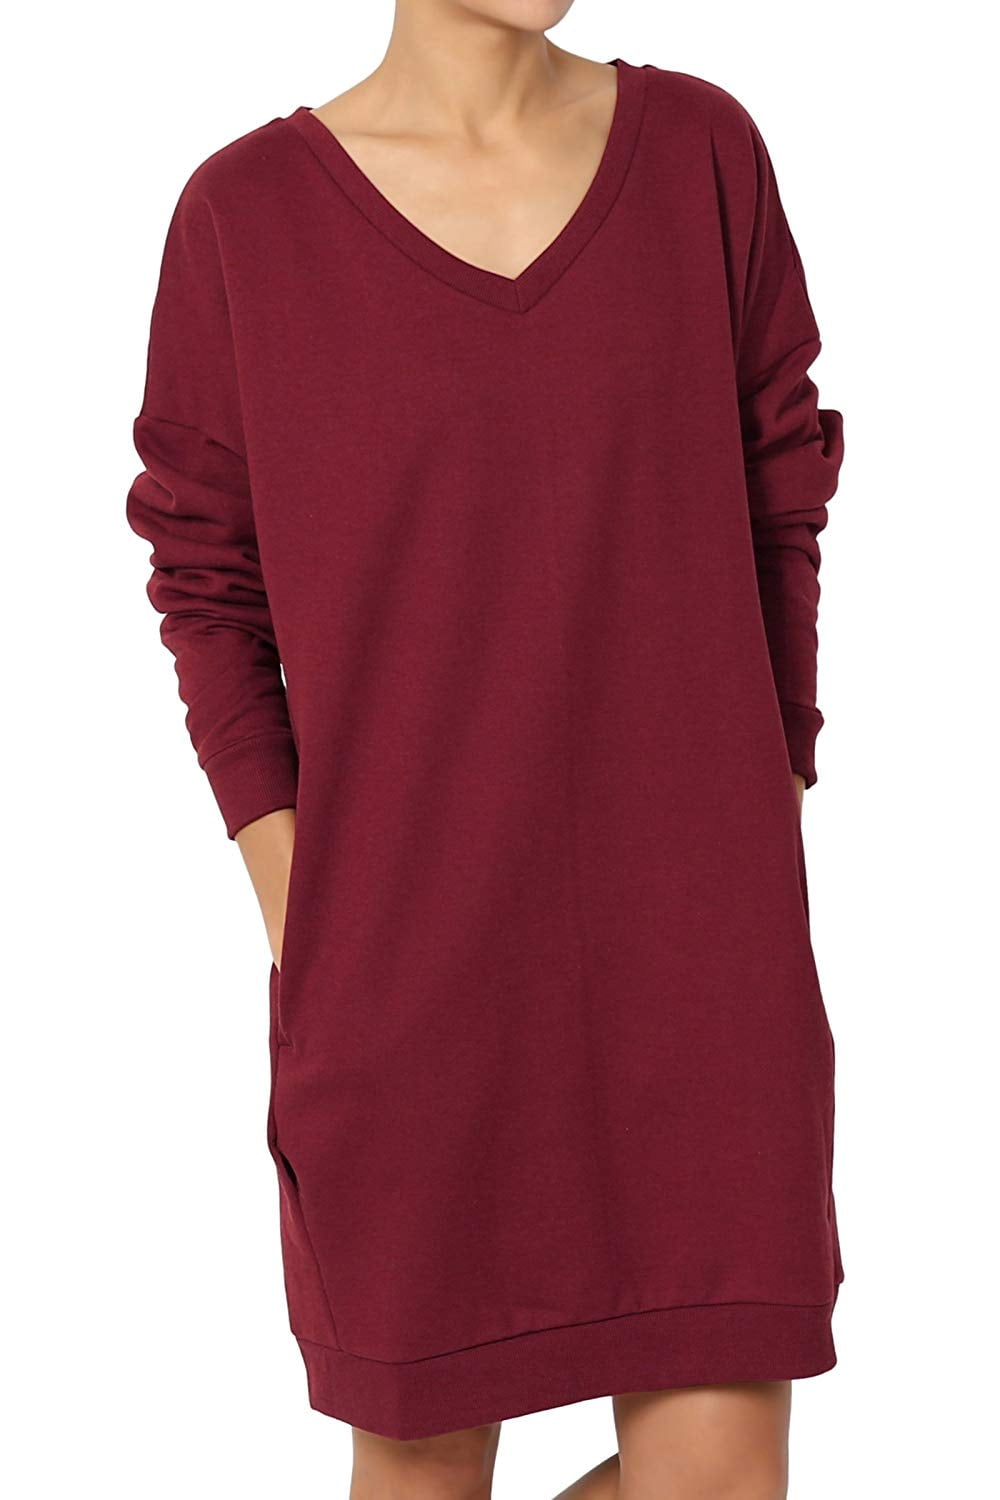 Haute Edition Women's Oversized Pullover Sweatshirt Dress - Walmart.com